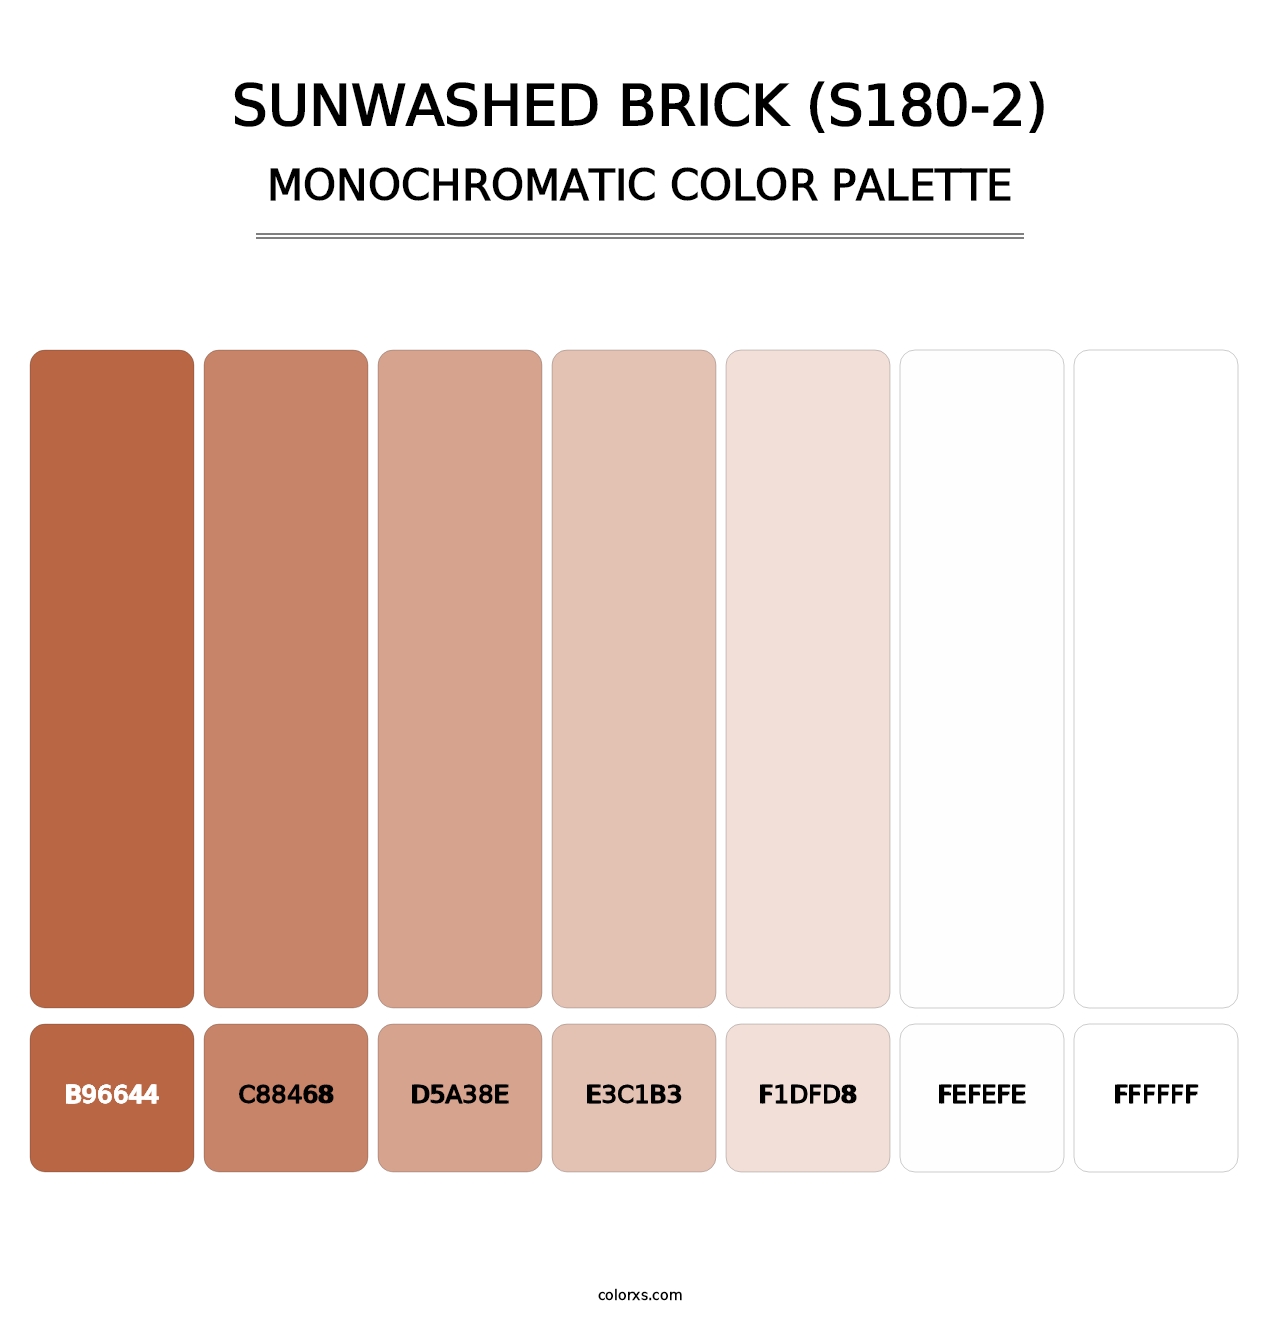 Sunwashed Brick (S180-2) - Monochromatic Color Palette